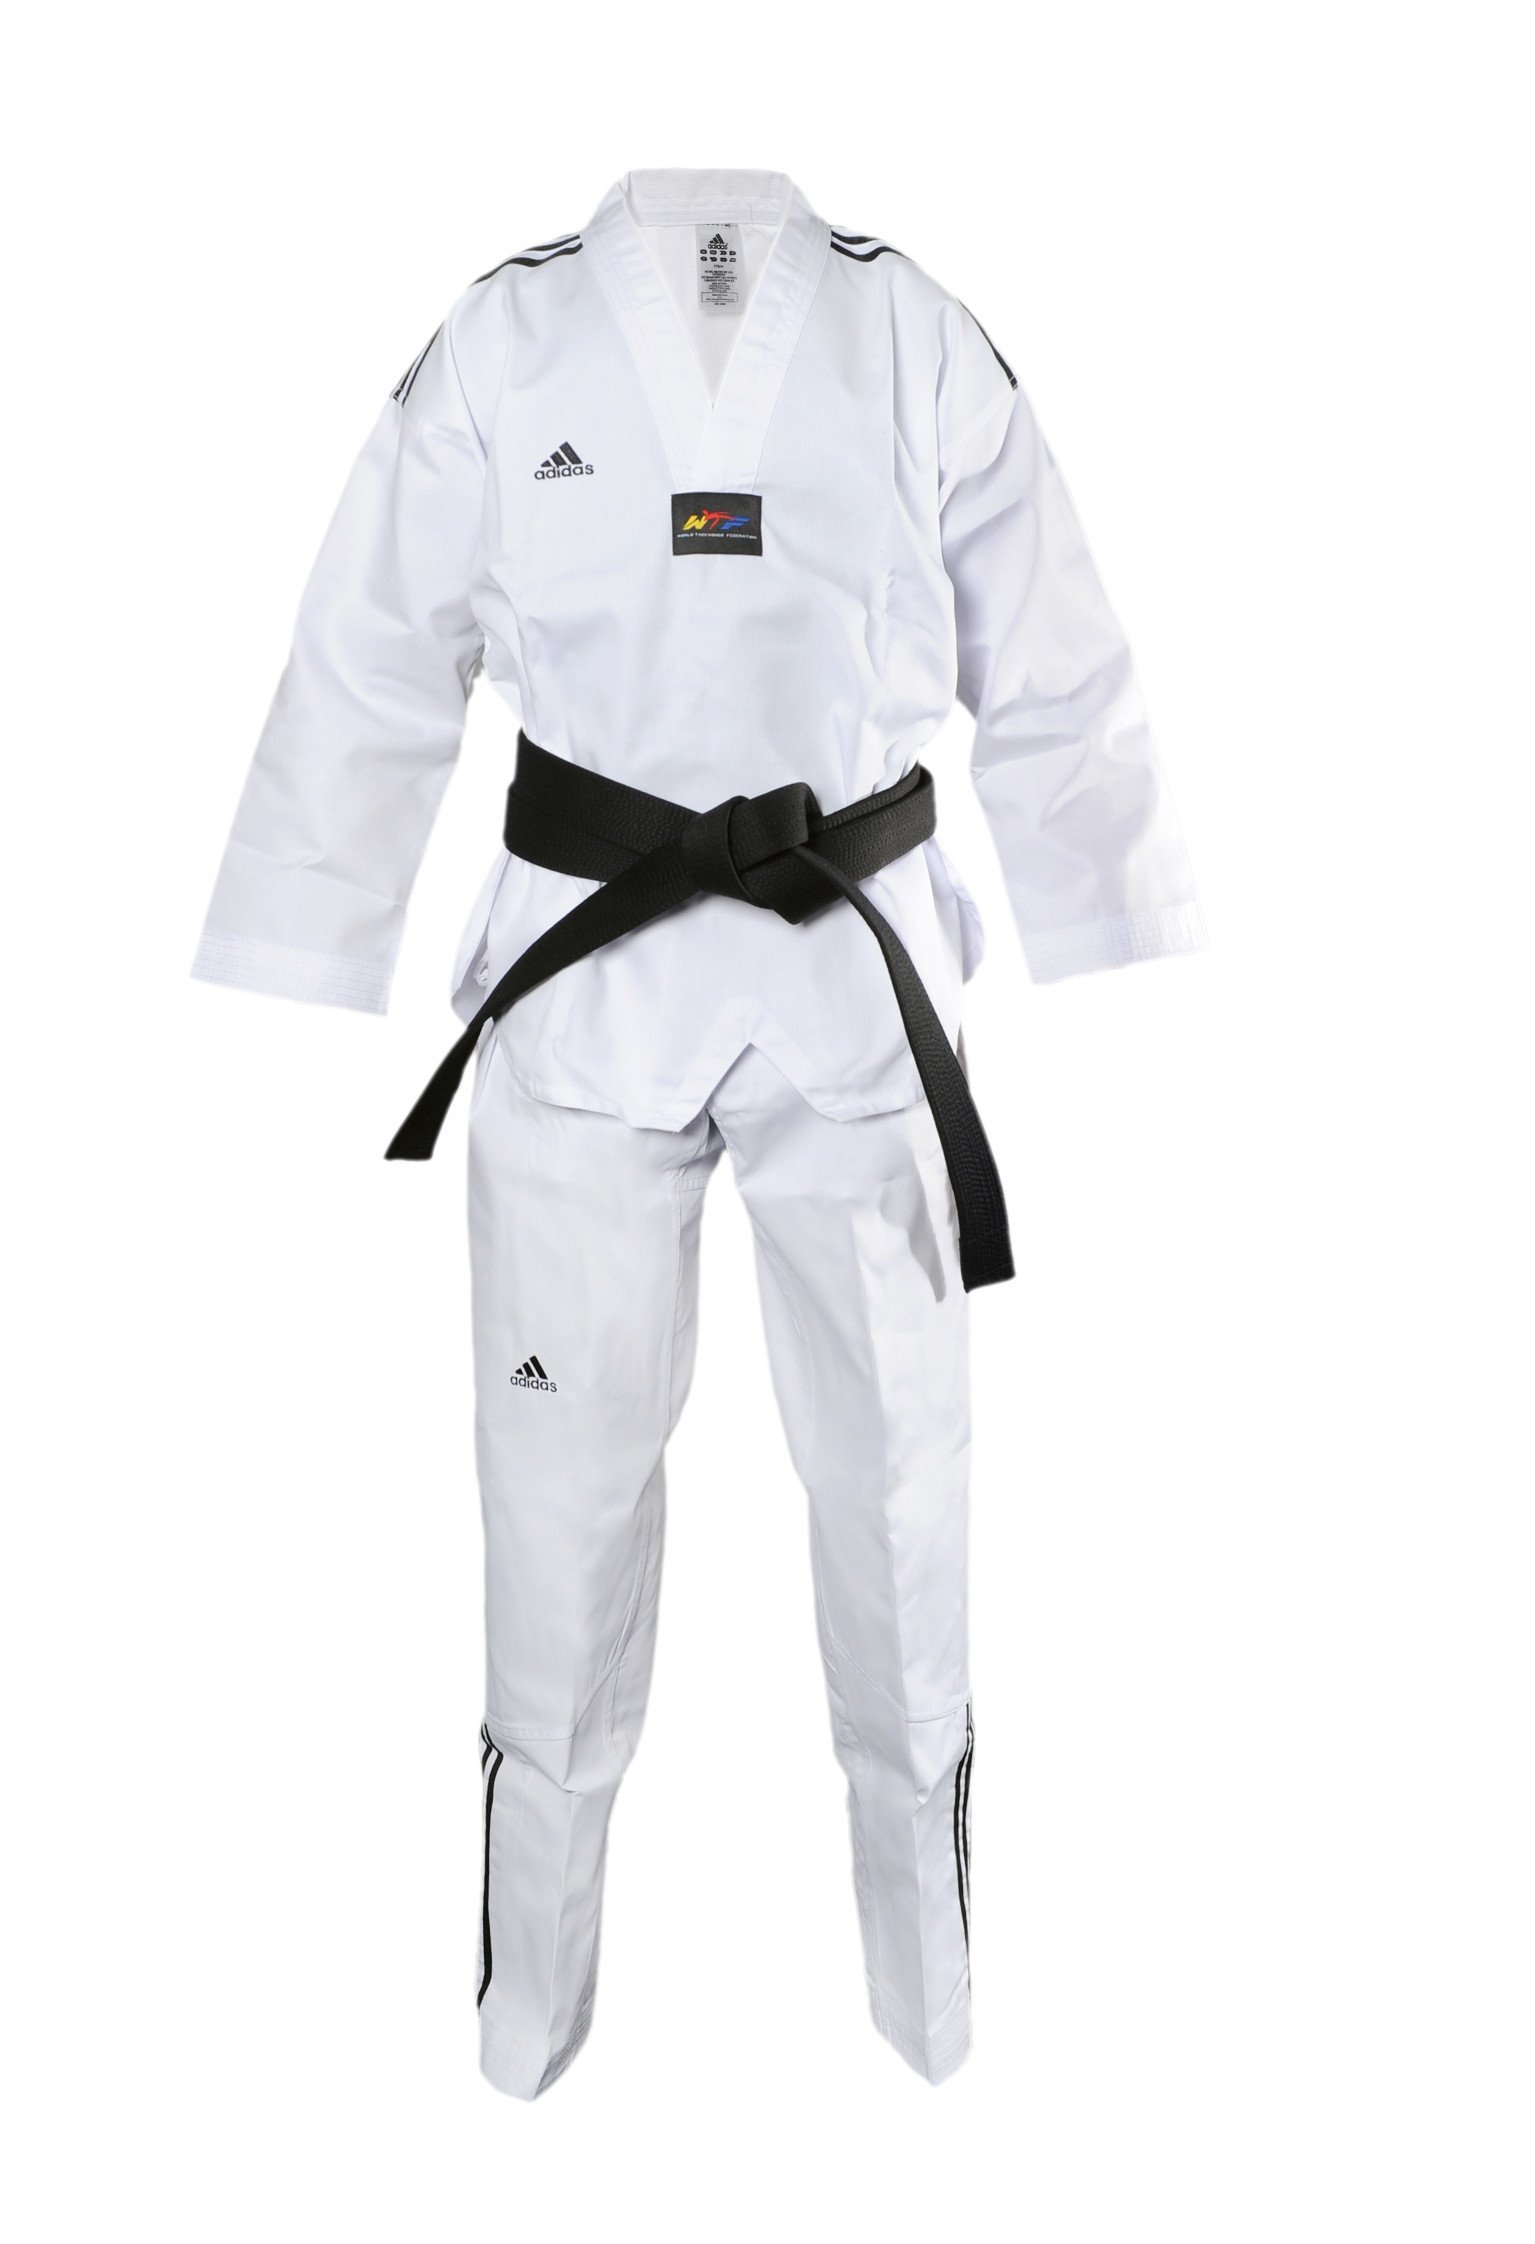 Dorawon Club Col Blanc Dobok Uniforme Taekwondo Enfant